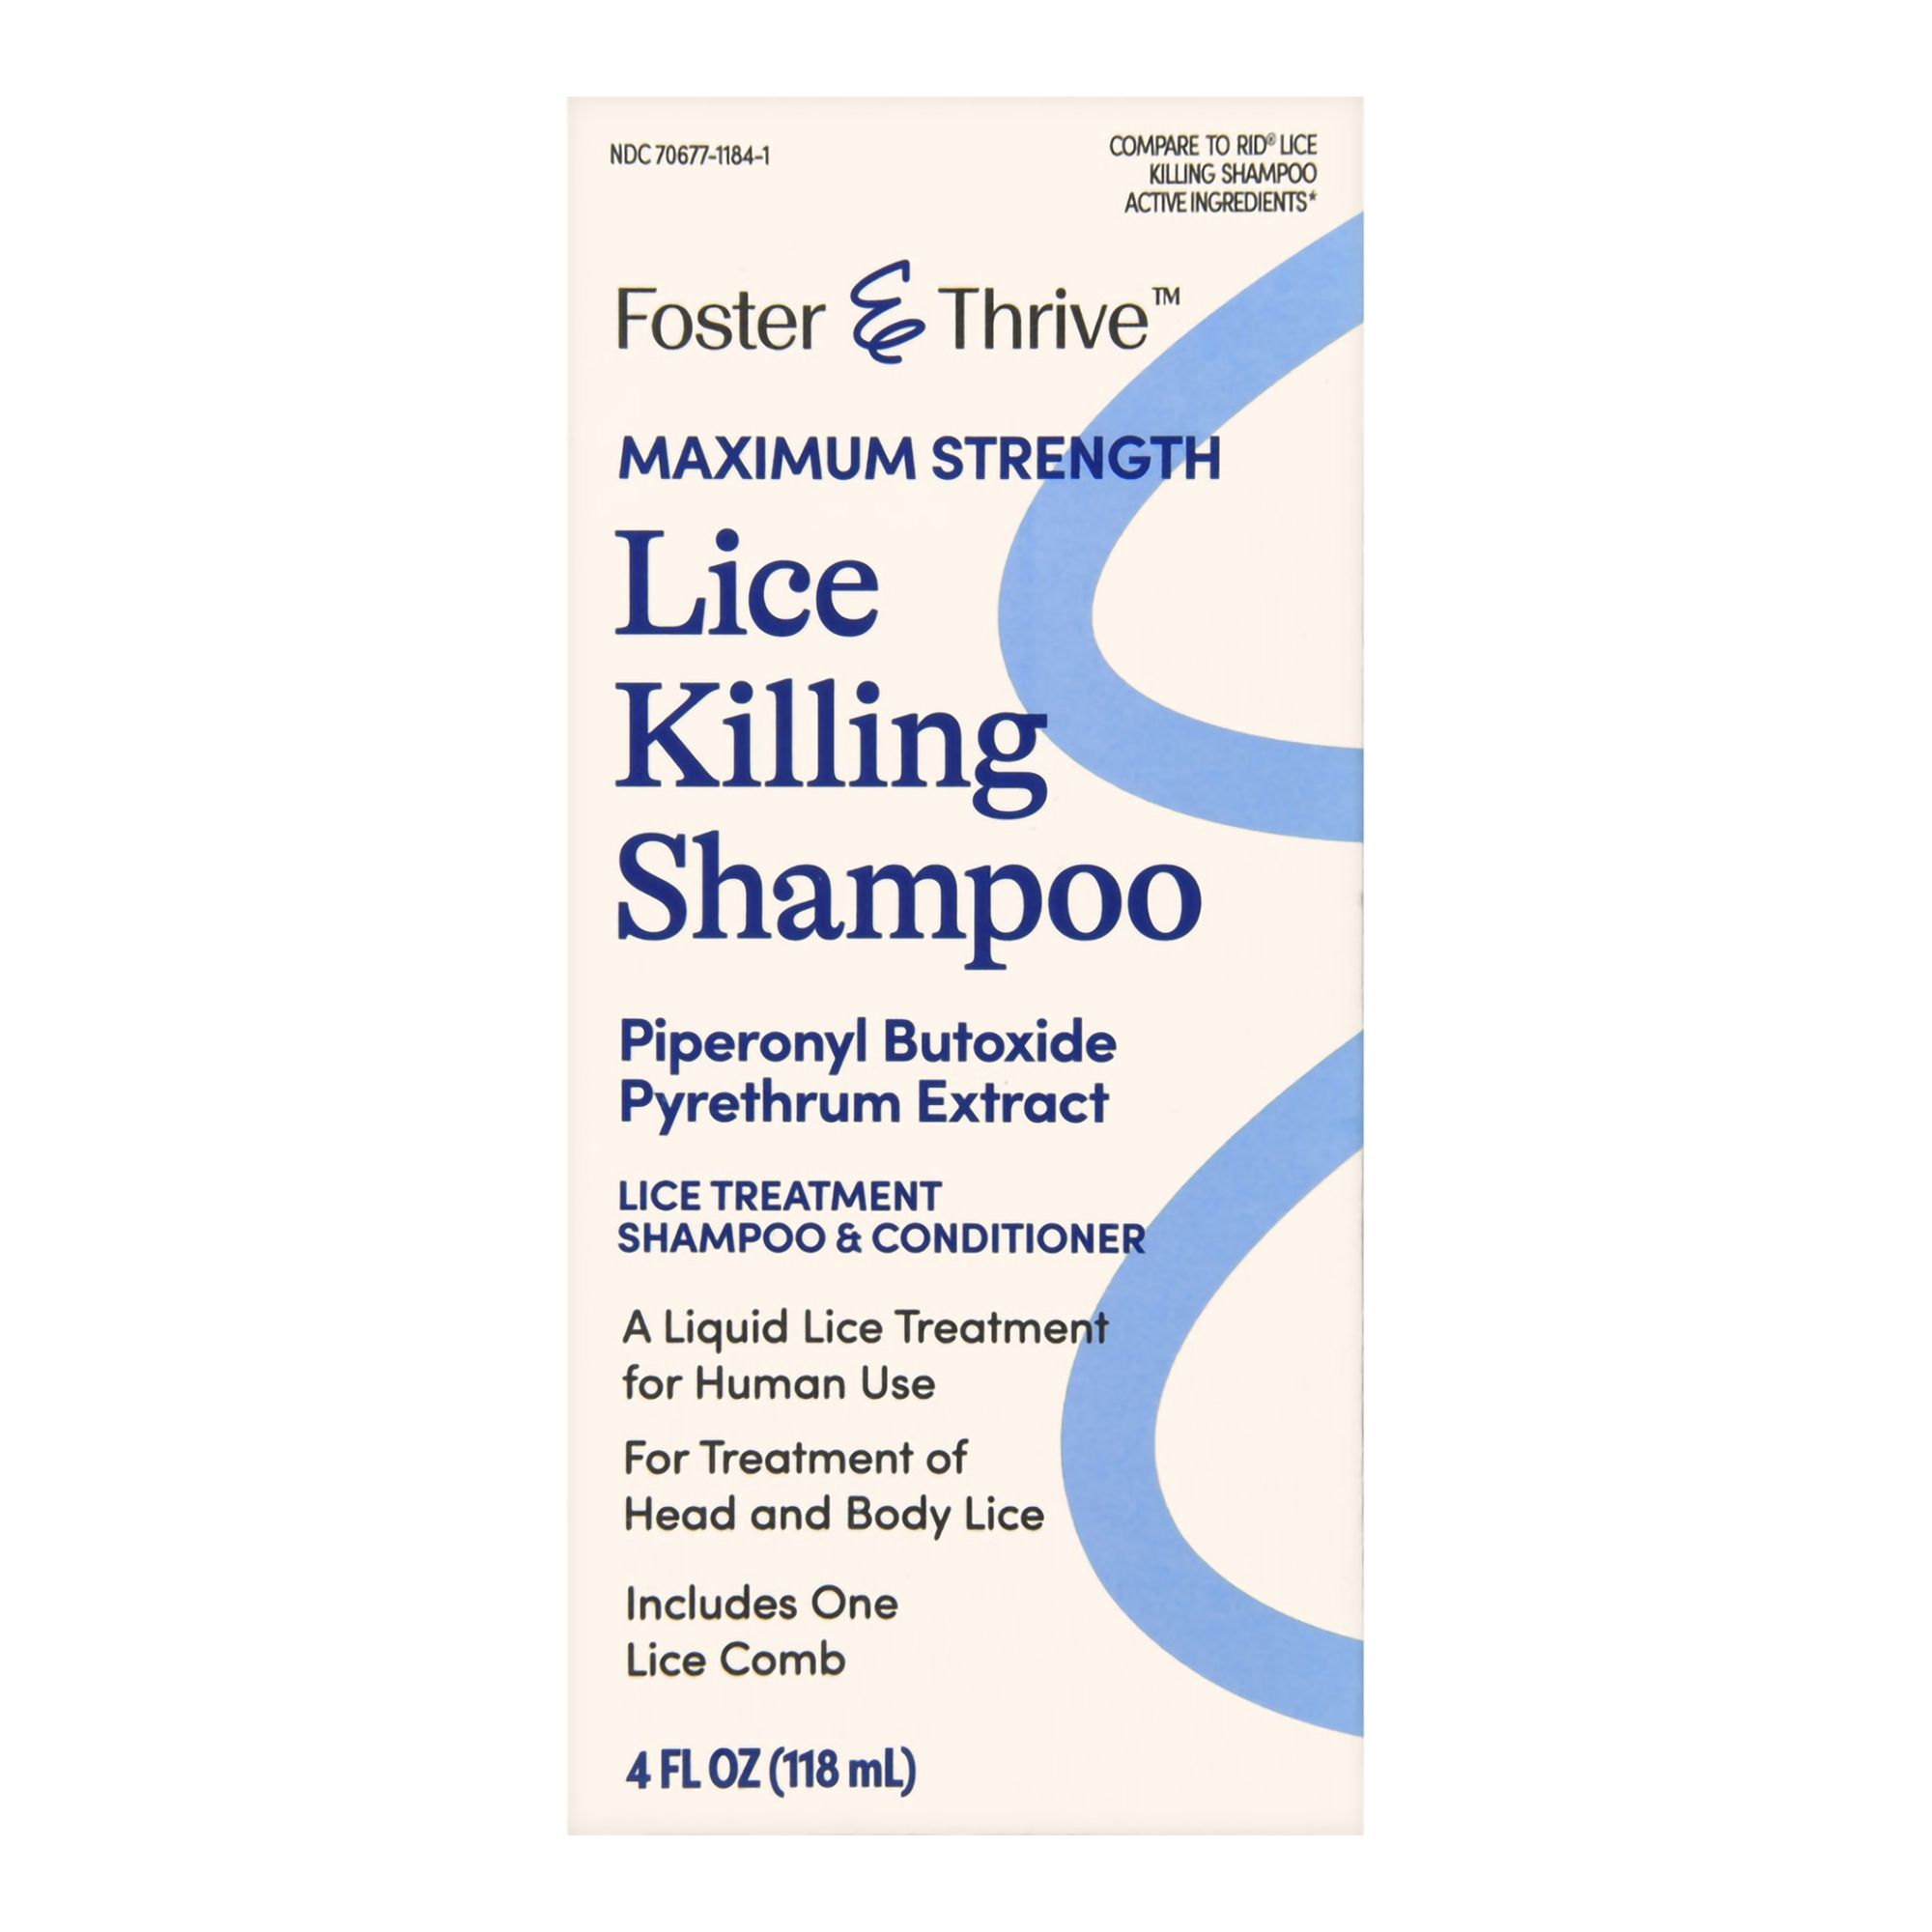 Foster & Thrive Maximum Strength Lice Killing Shampoo - 4 fl oz